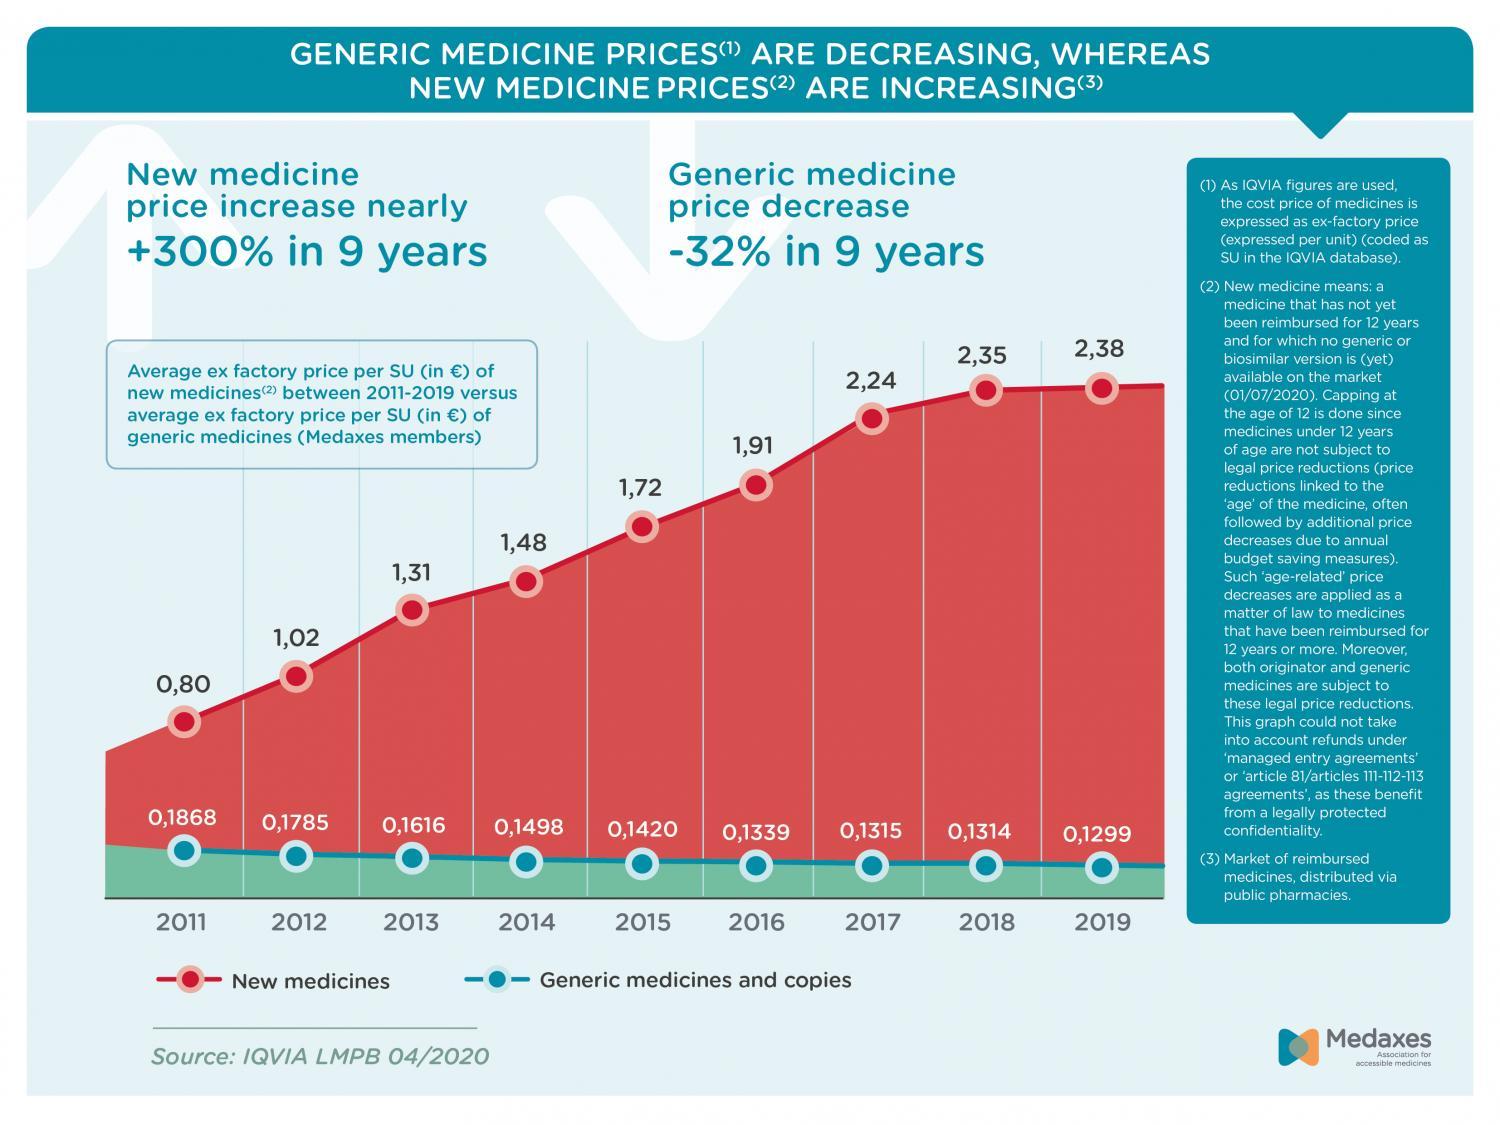 generic medicine price decreases vs new medicine price increases